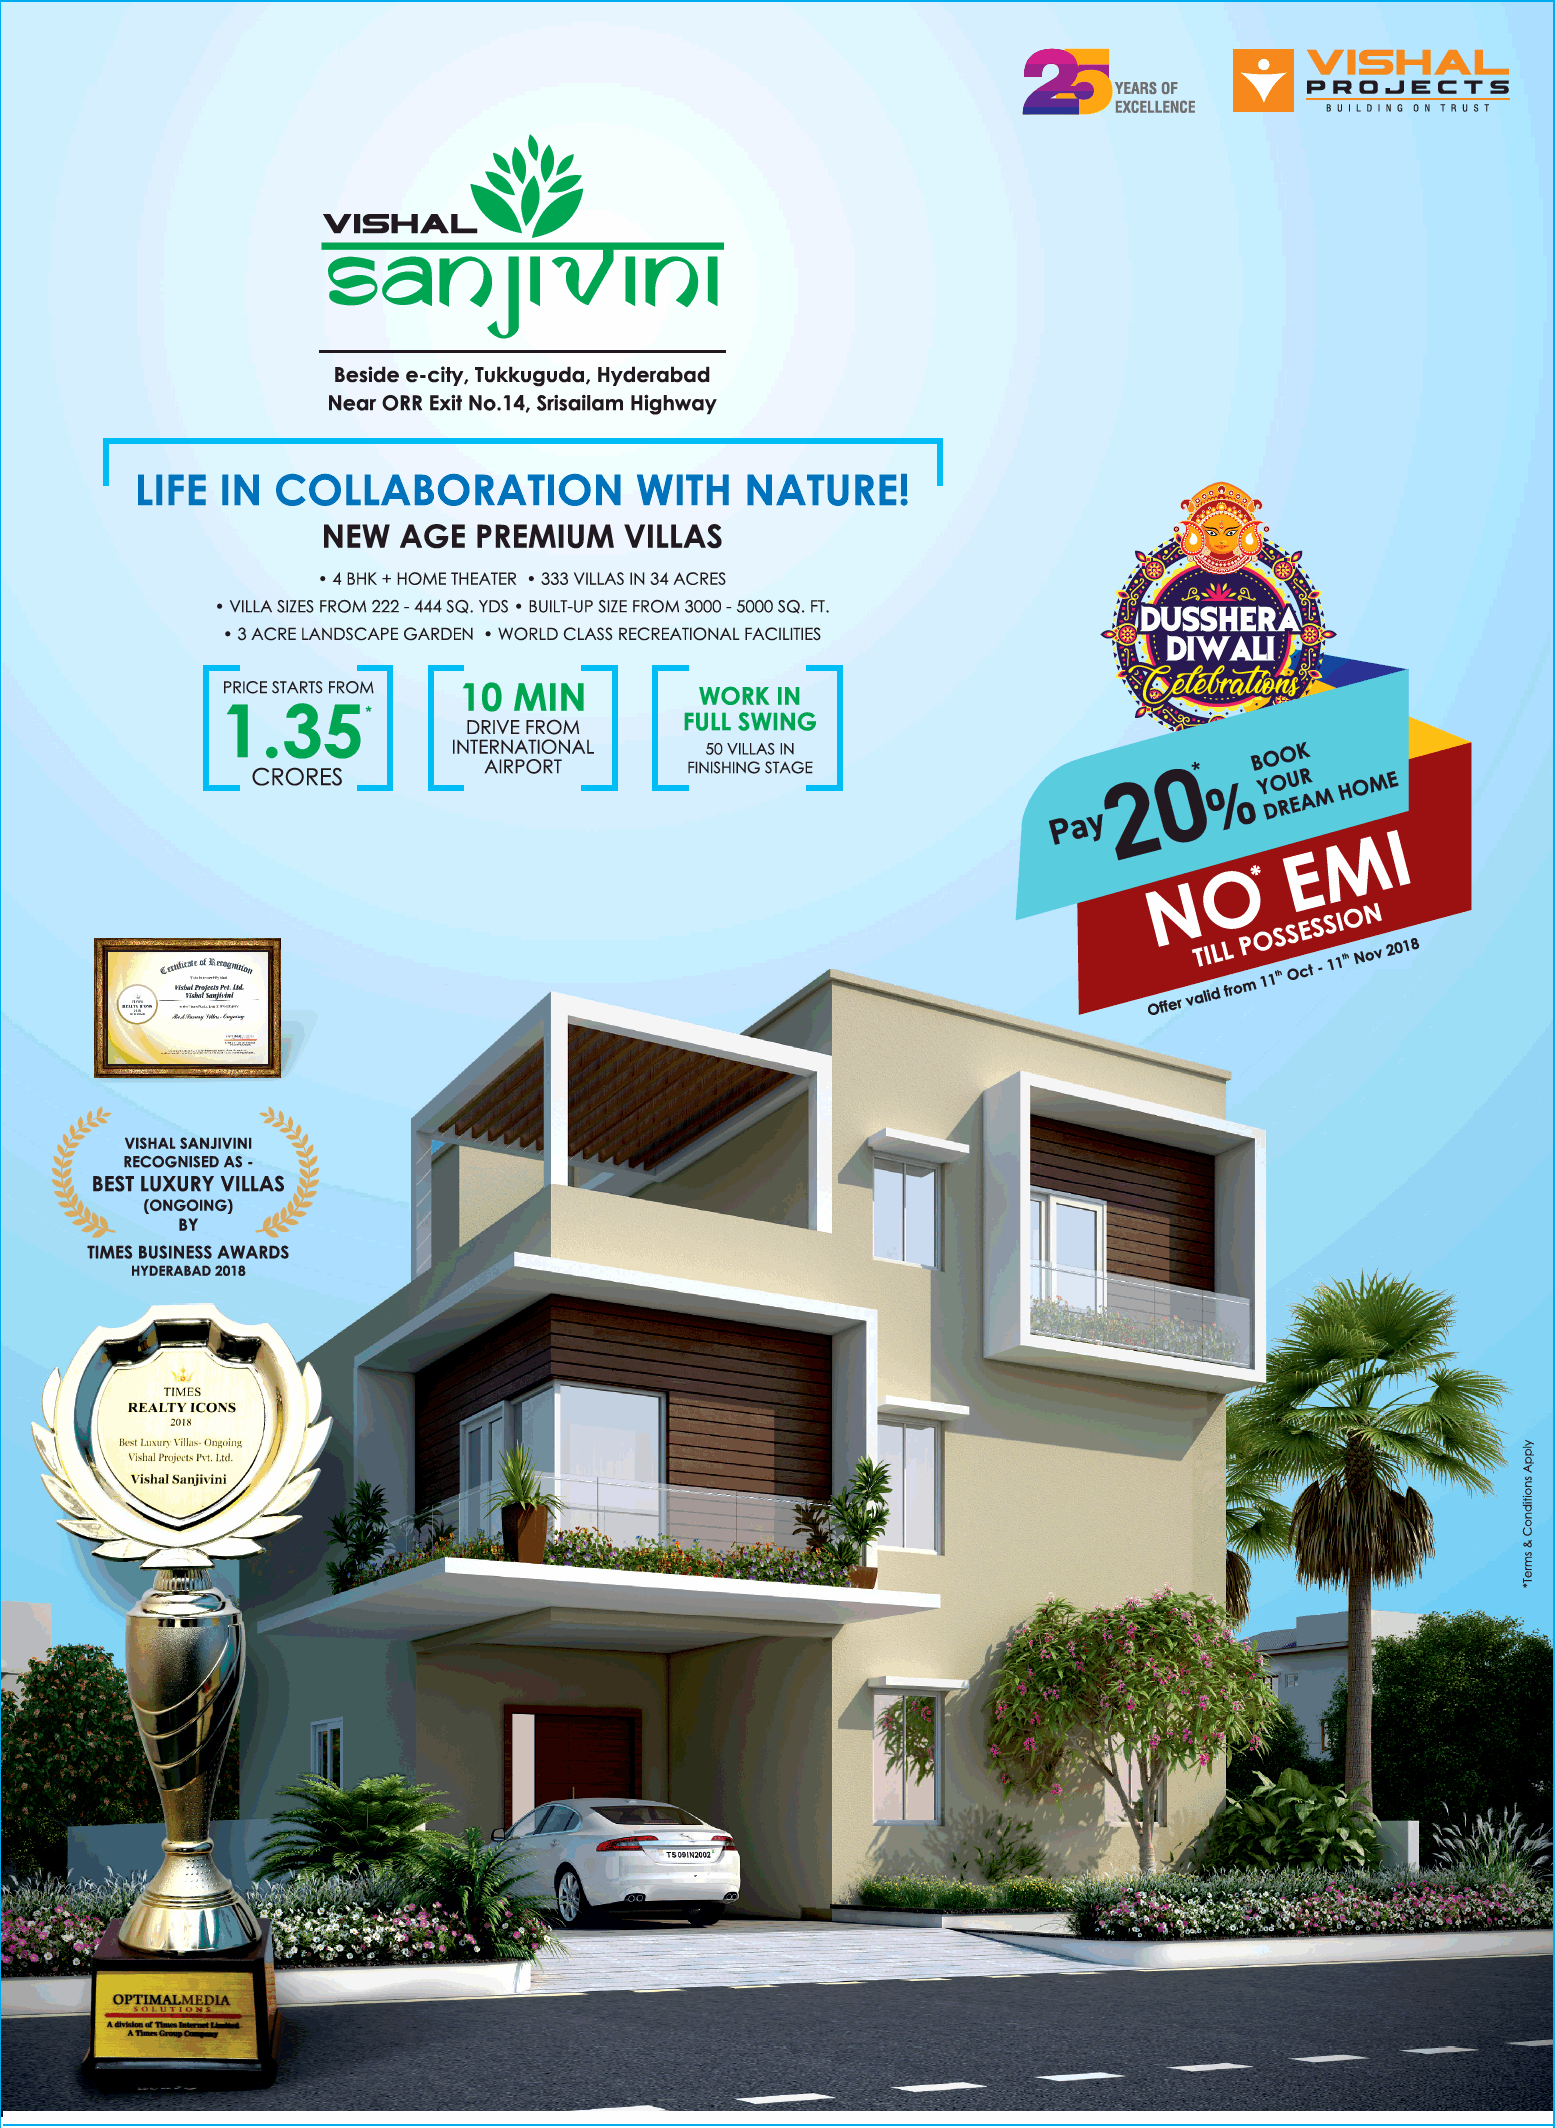 Avail new age of premium villas at Vishal Sanjivini in Hyderabad Update